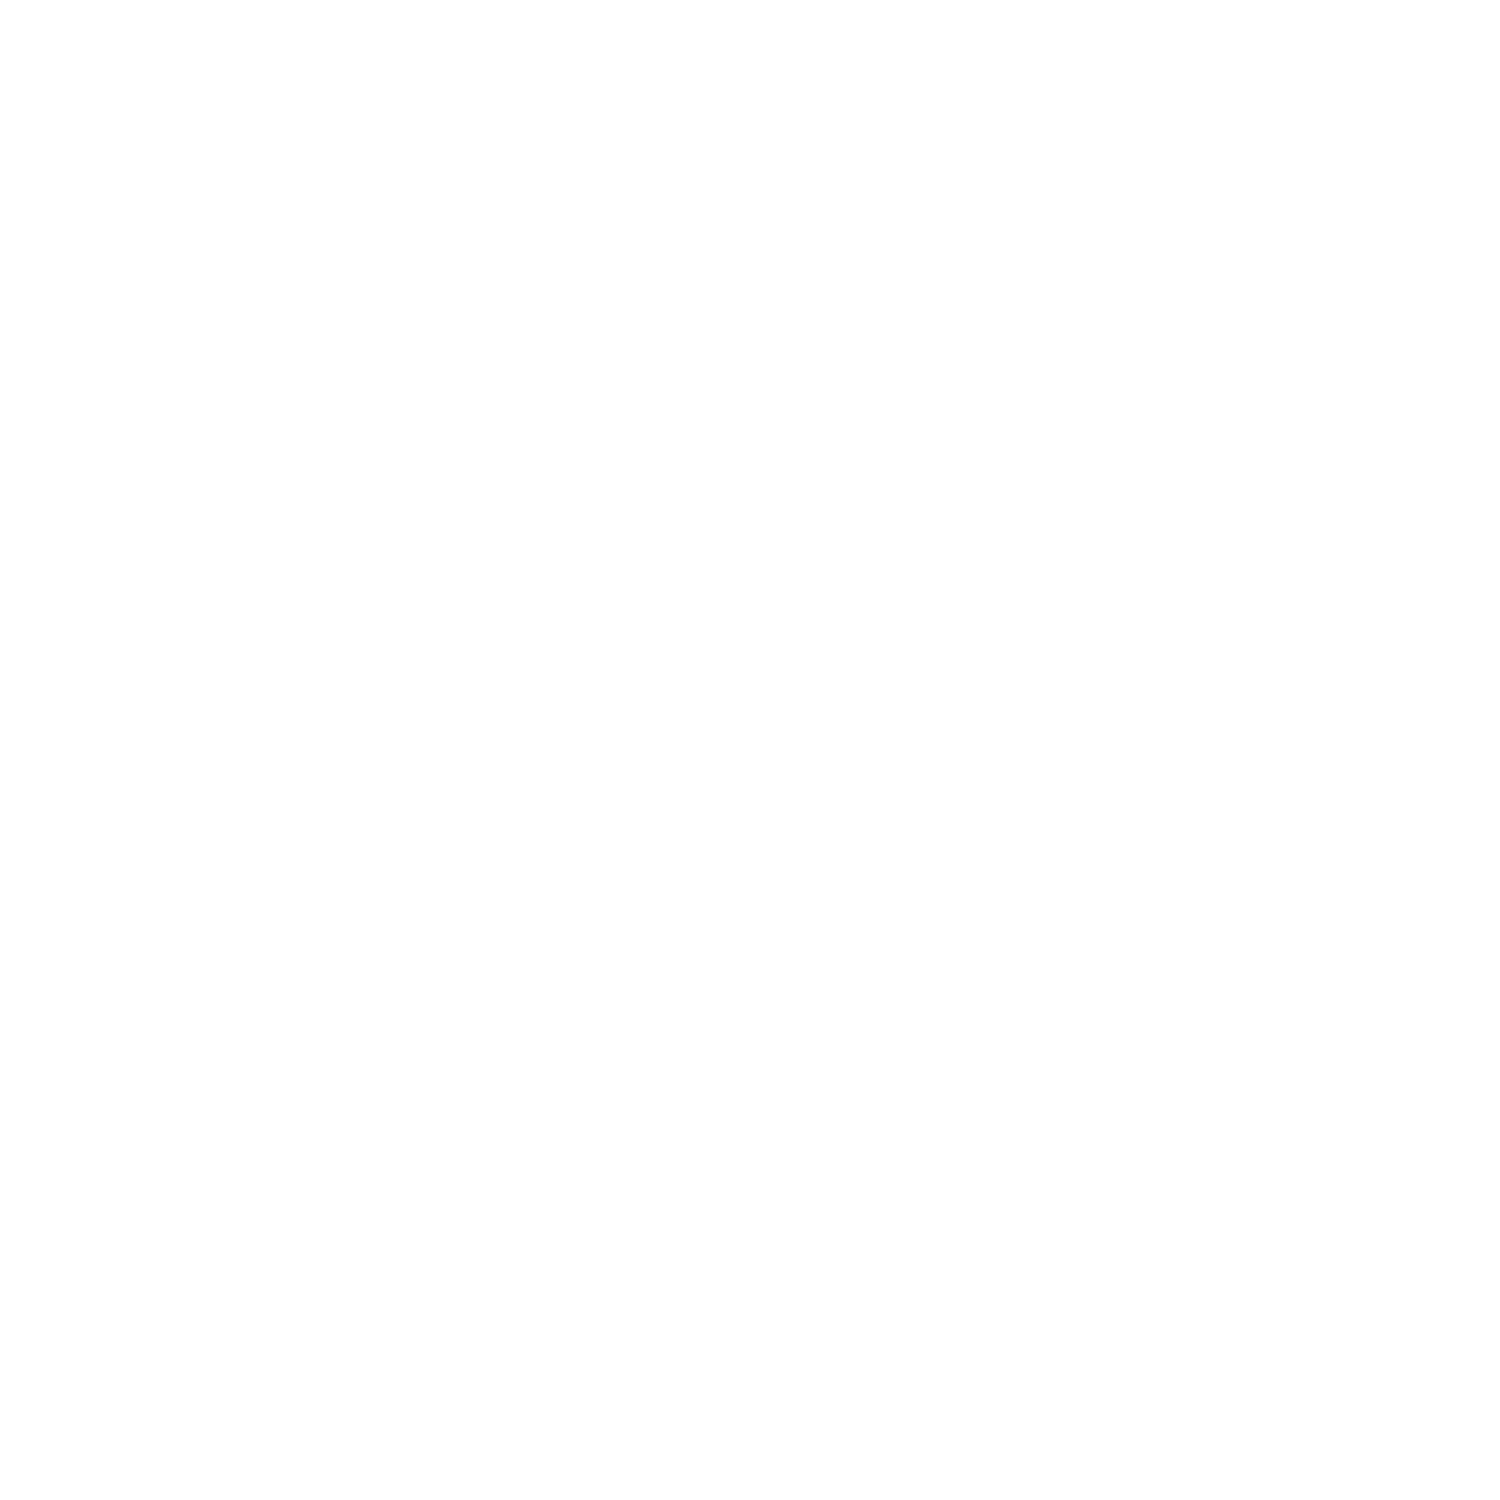 The BrandBar Agency